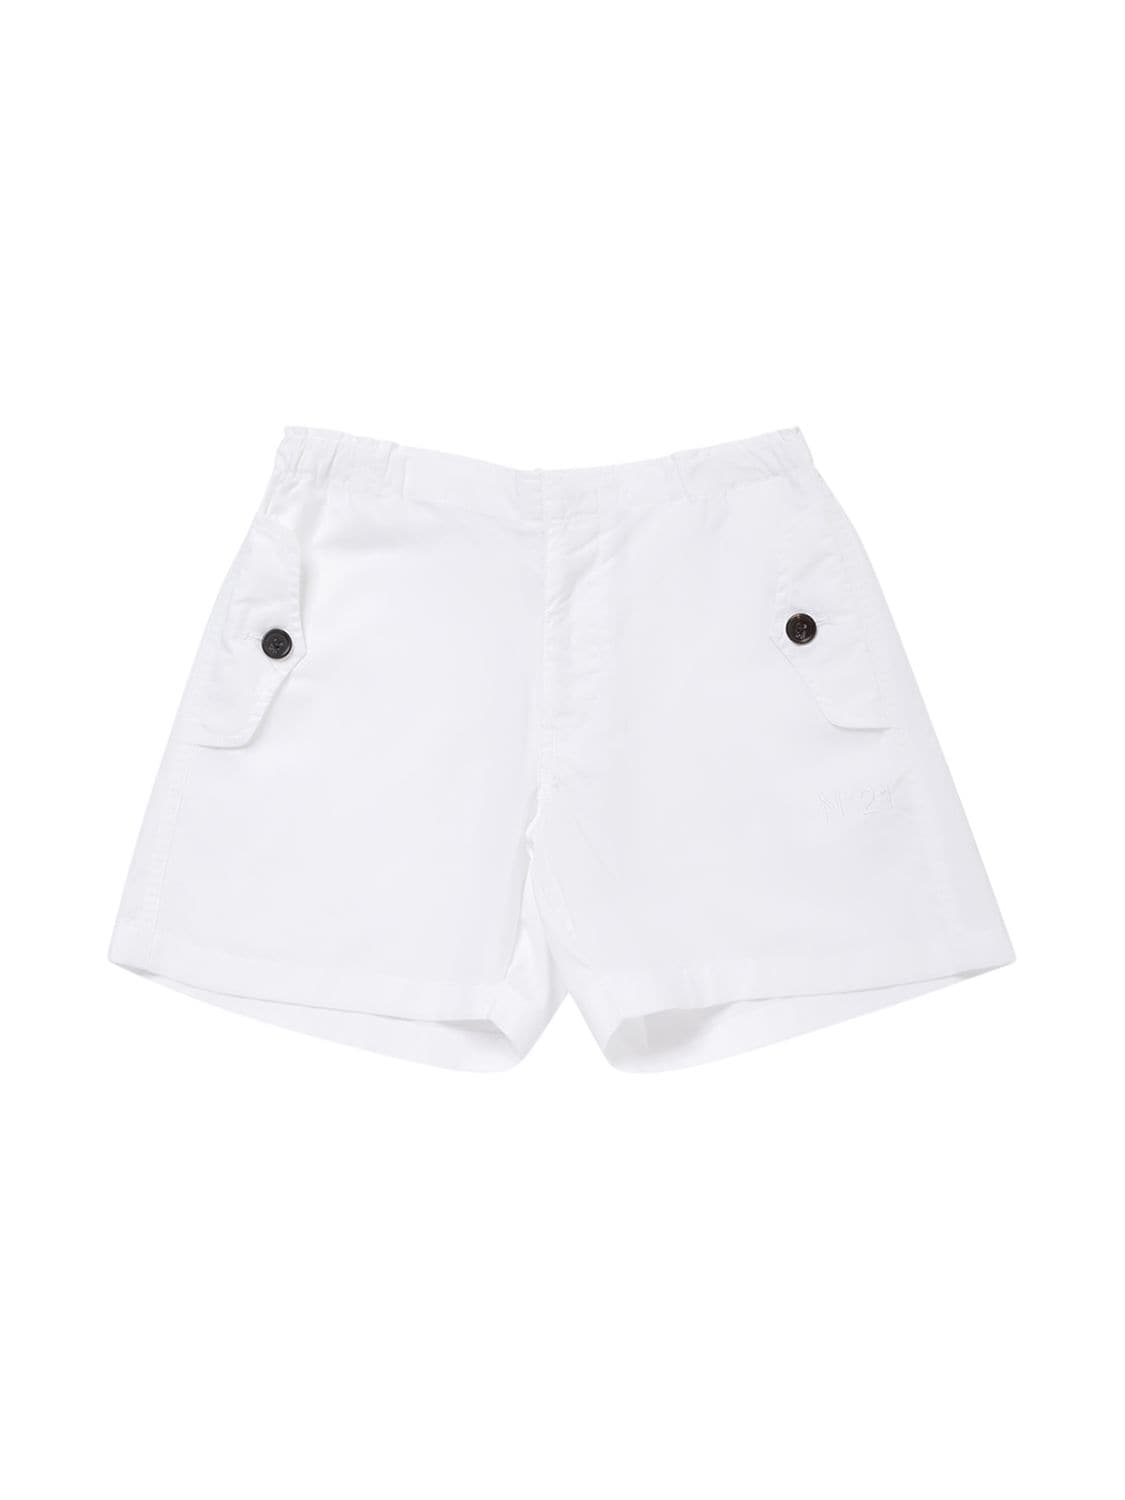 Image of Cotton Poplin Pocket Shorts